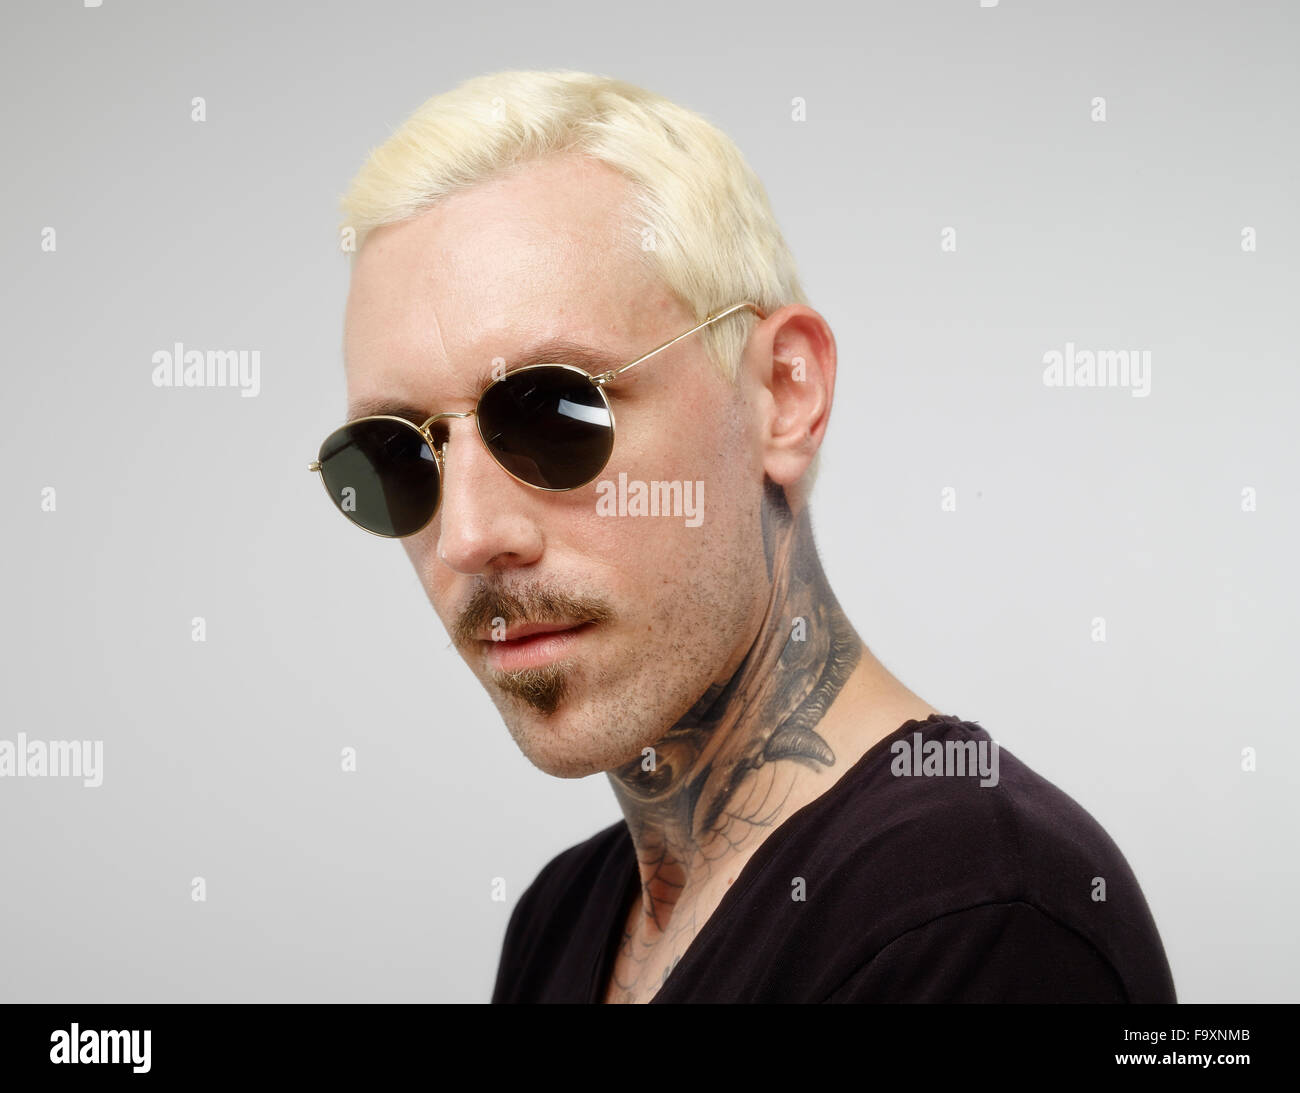 Portrait of man with tattoo et cheveux teints blonde wearing sunglasses Banque D'Images